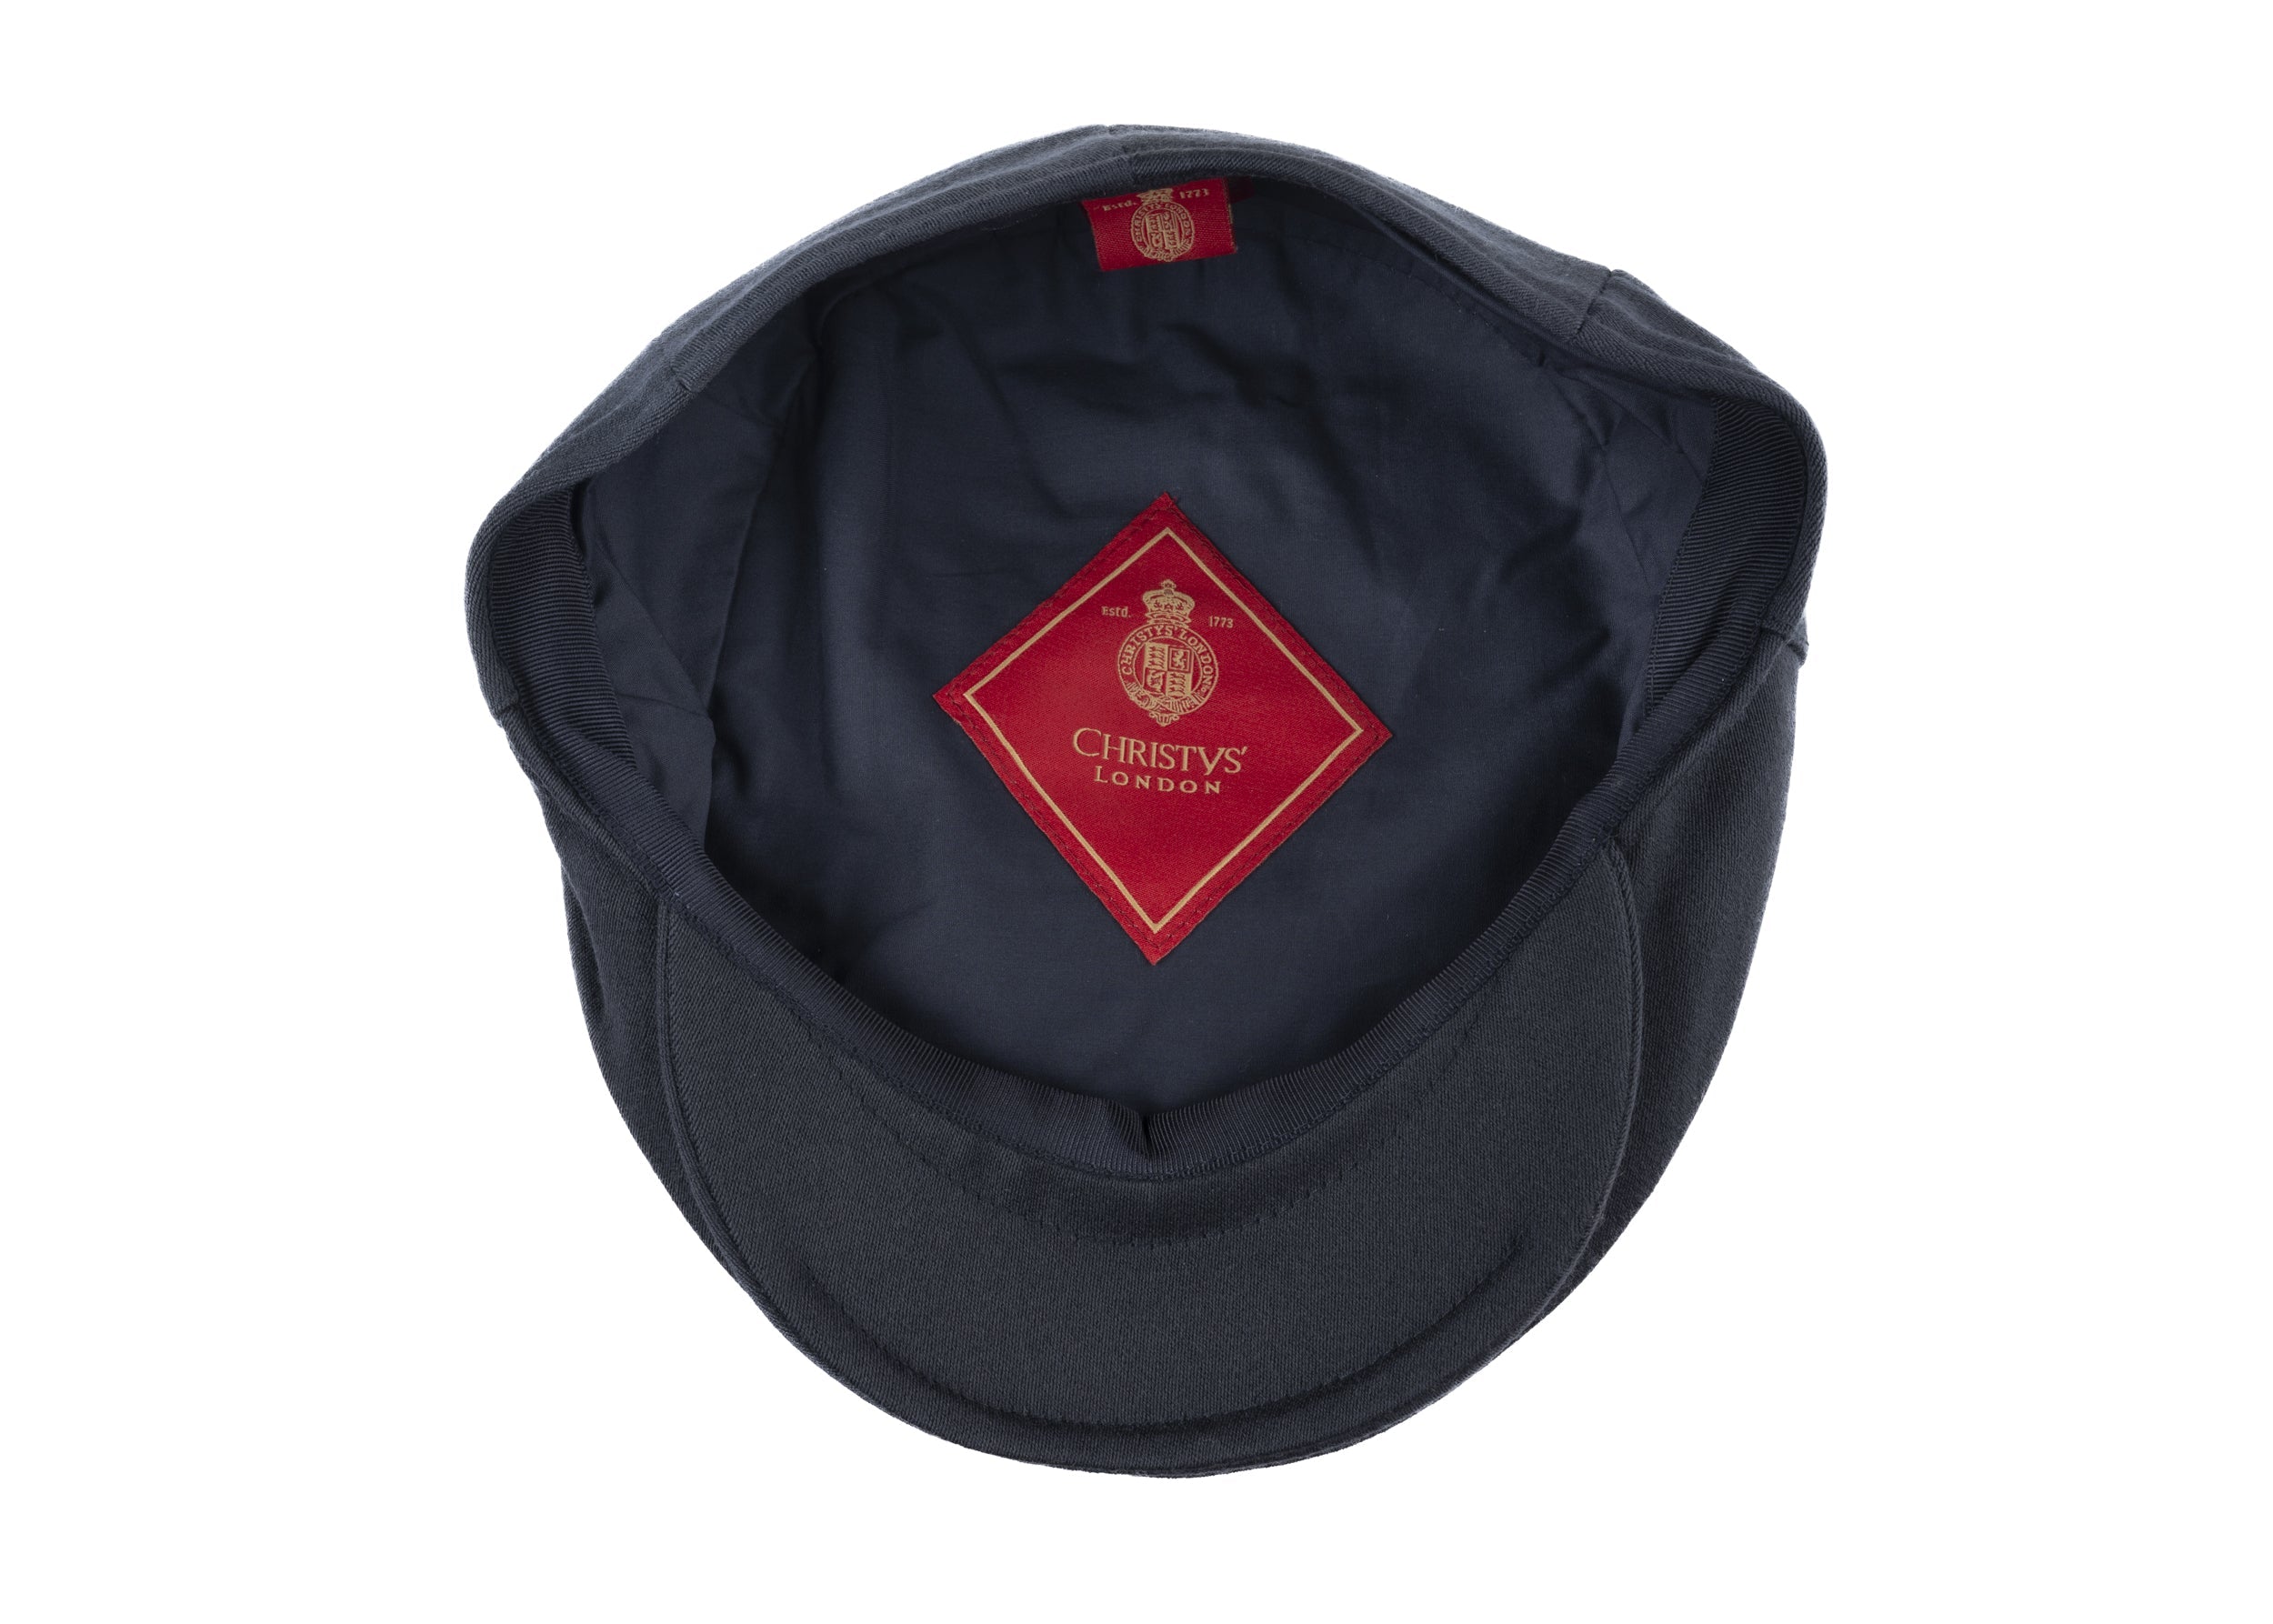 Ellis Balmoral flat cap in satin wool fabric in Navy